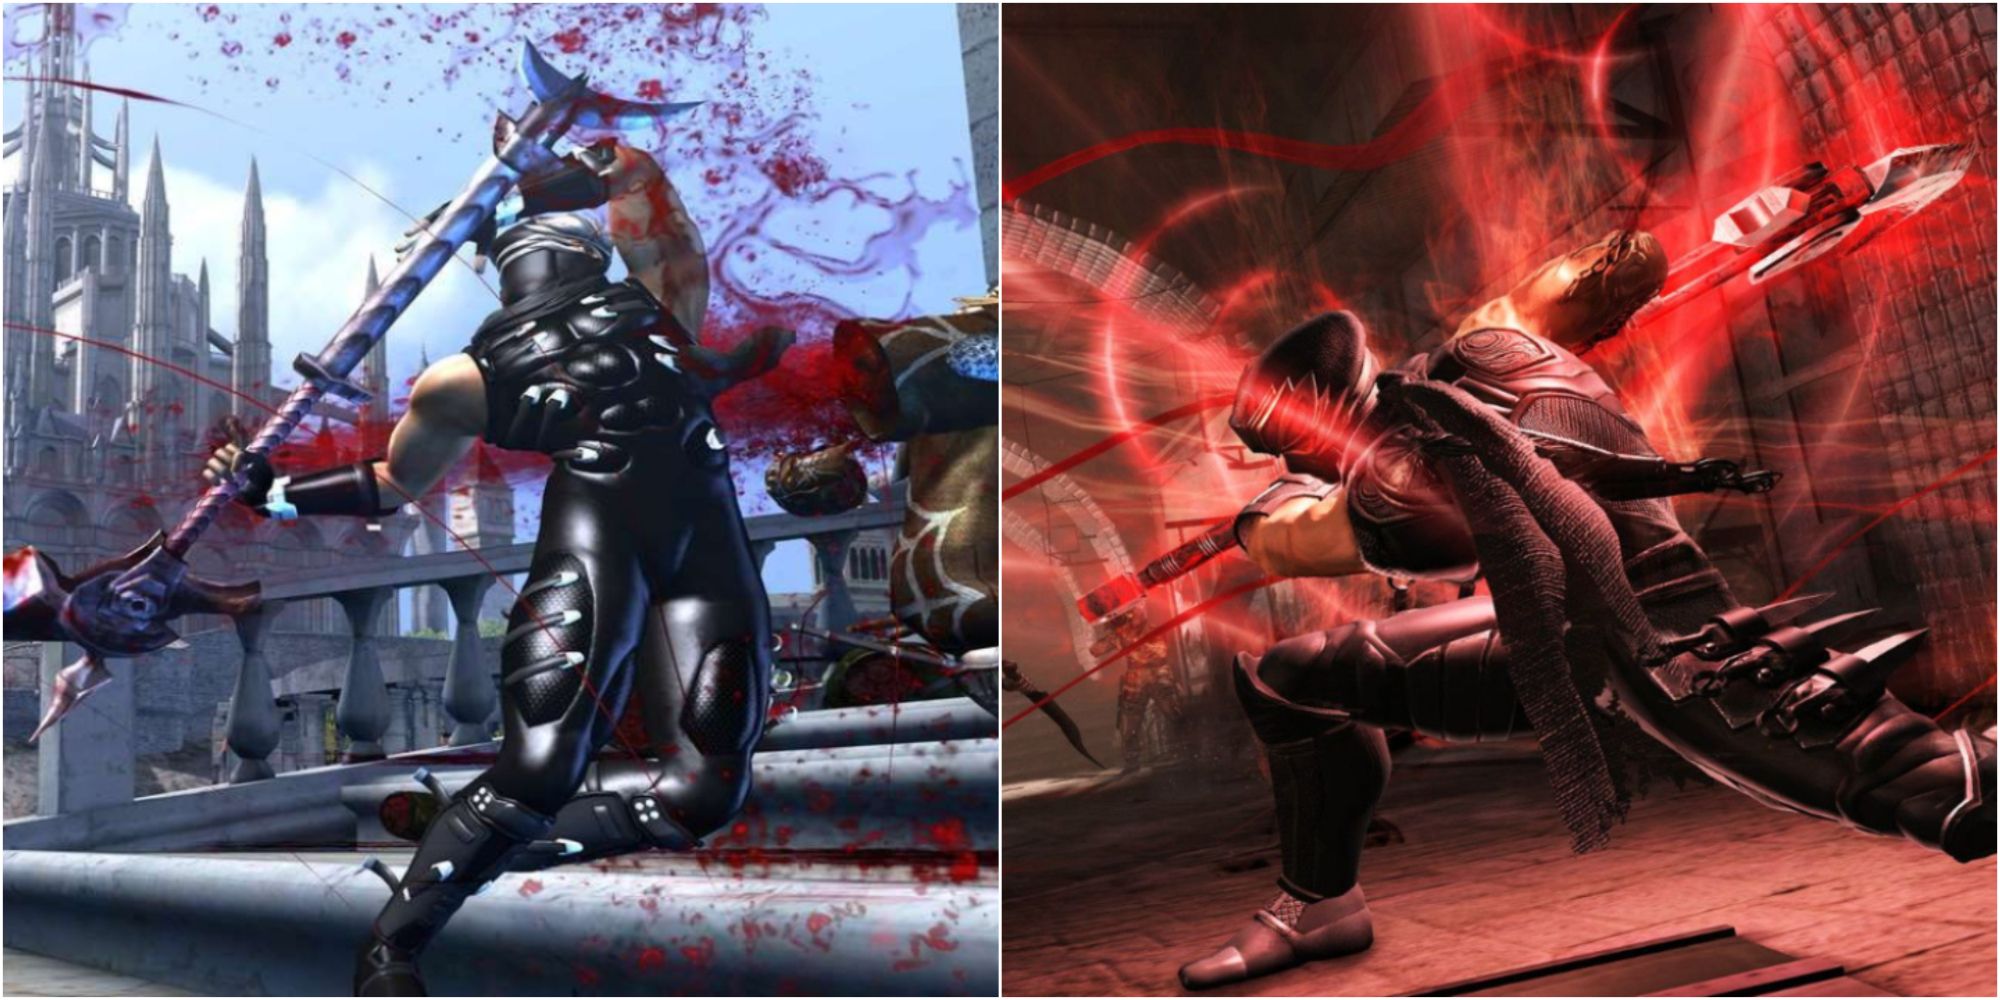 Ninja Gaiden collage - Scythe and sword